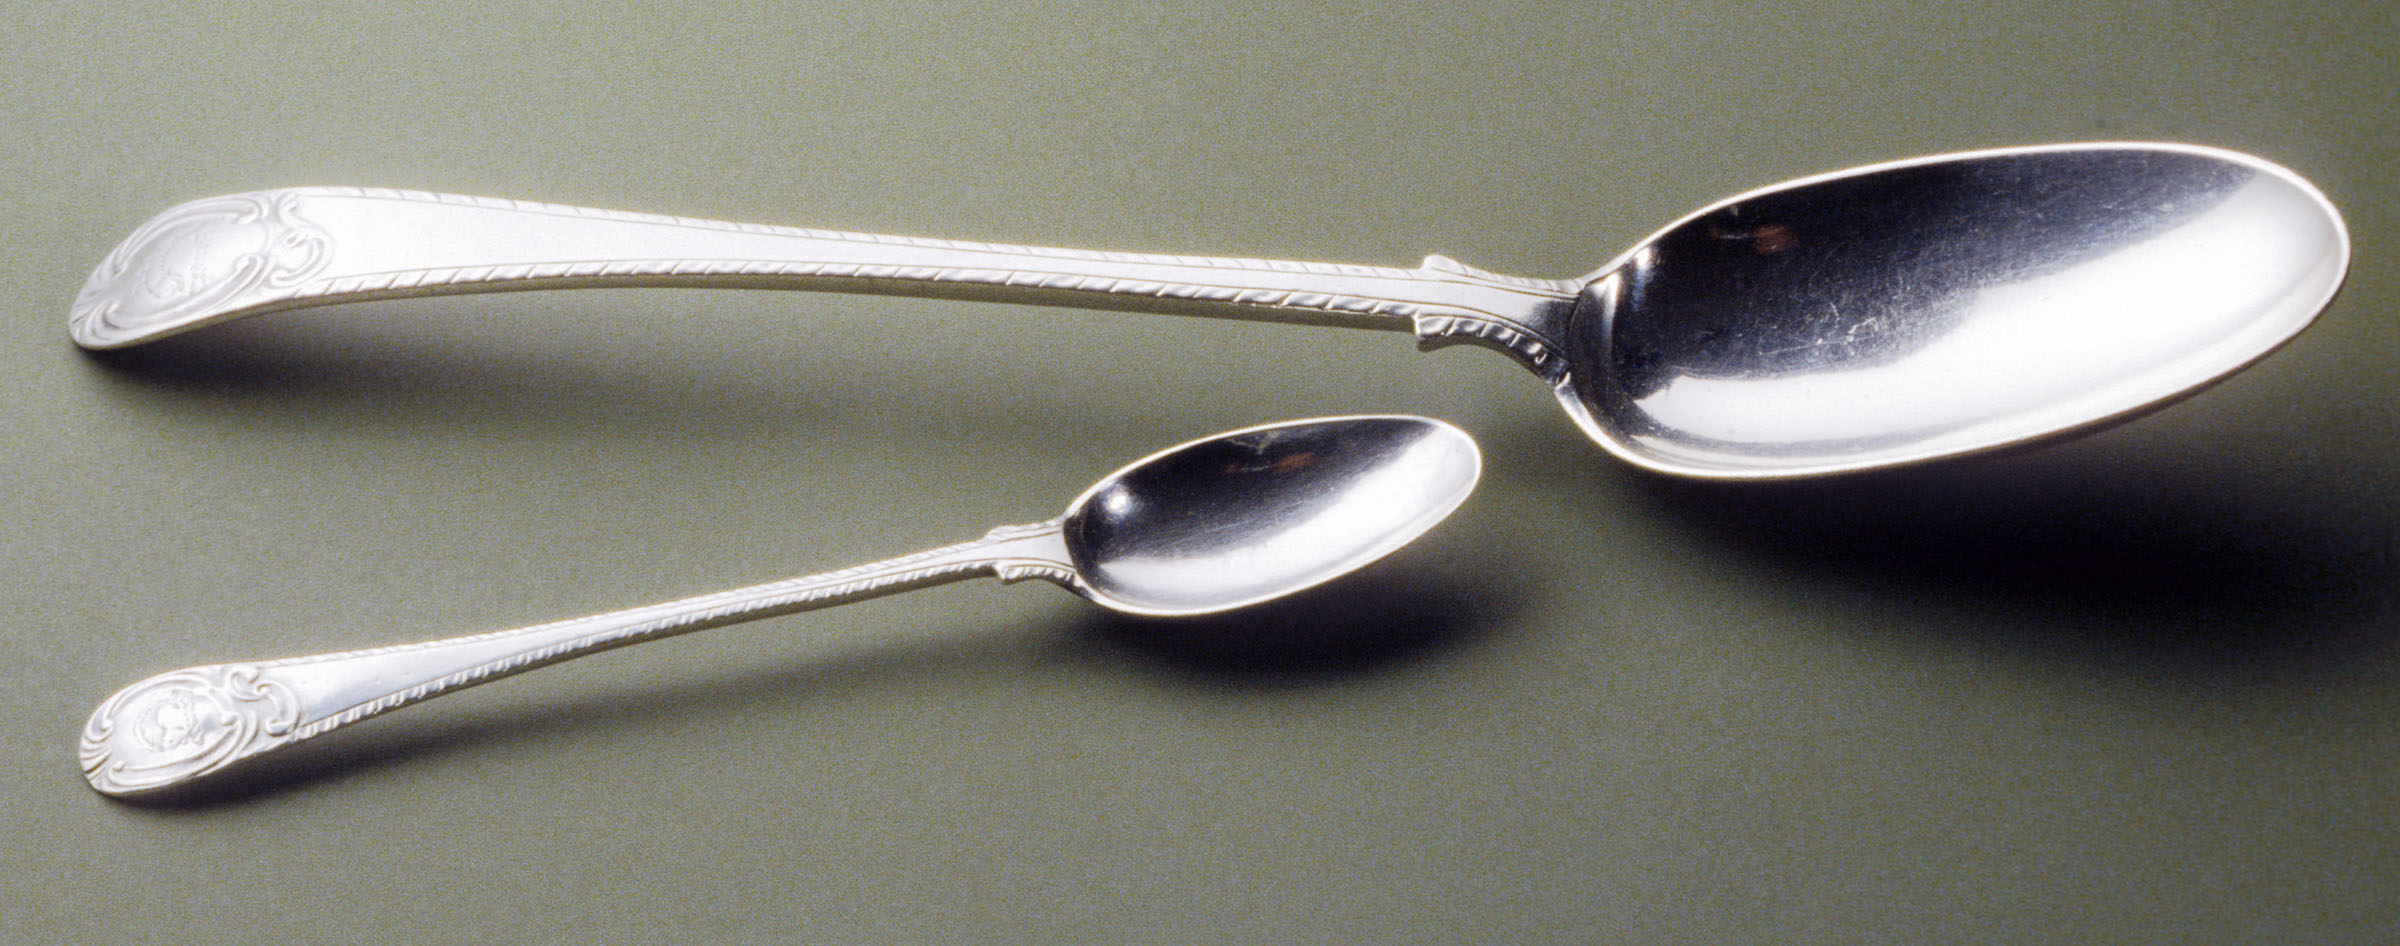 1962.0240.1403, 1962.0240.561 Spoon, Tablespoon, Teaspoon